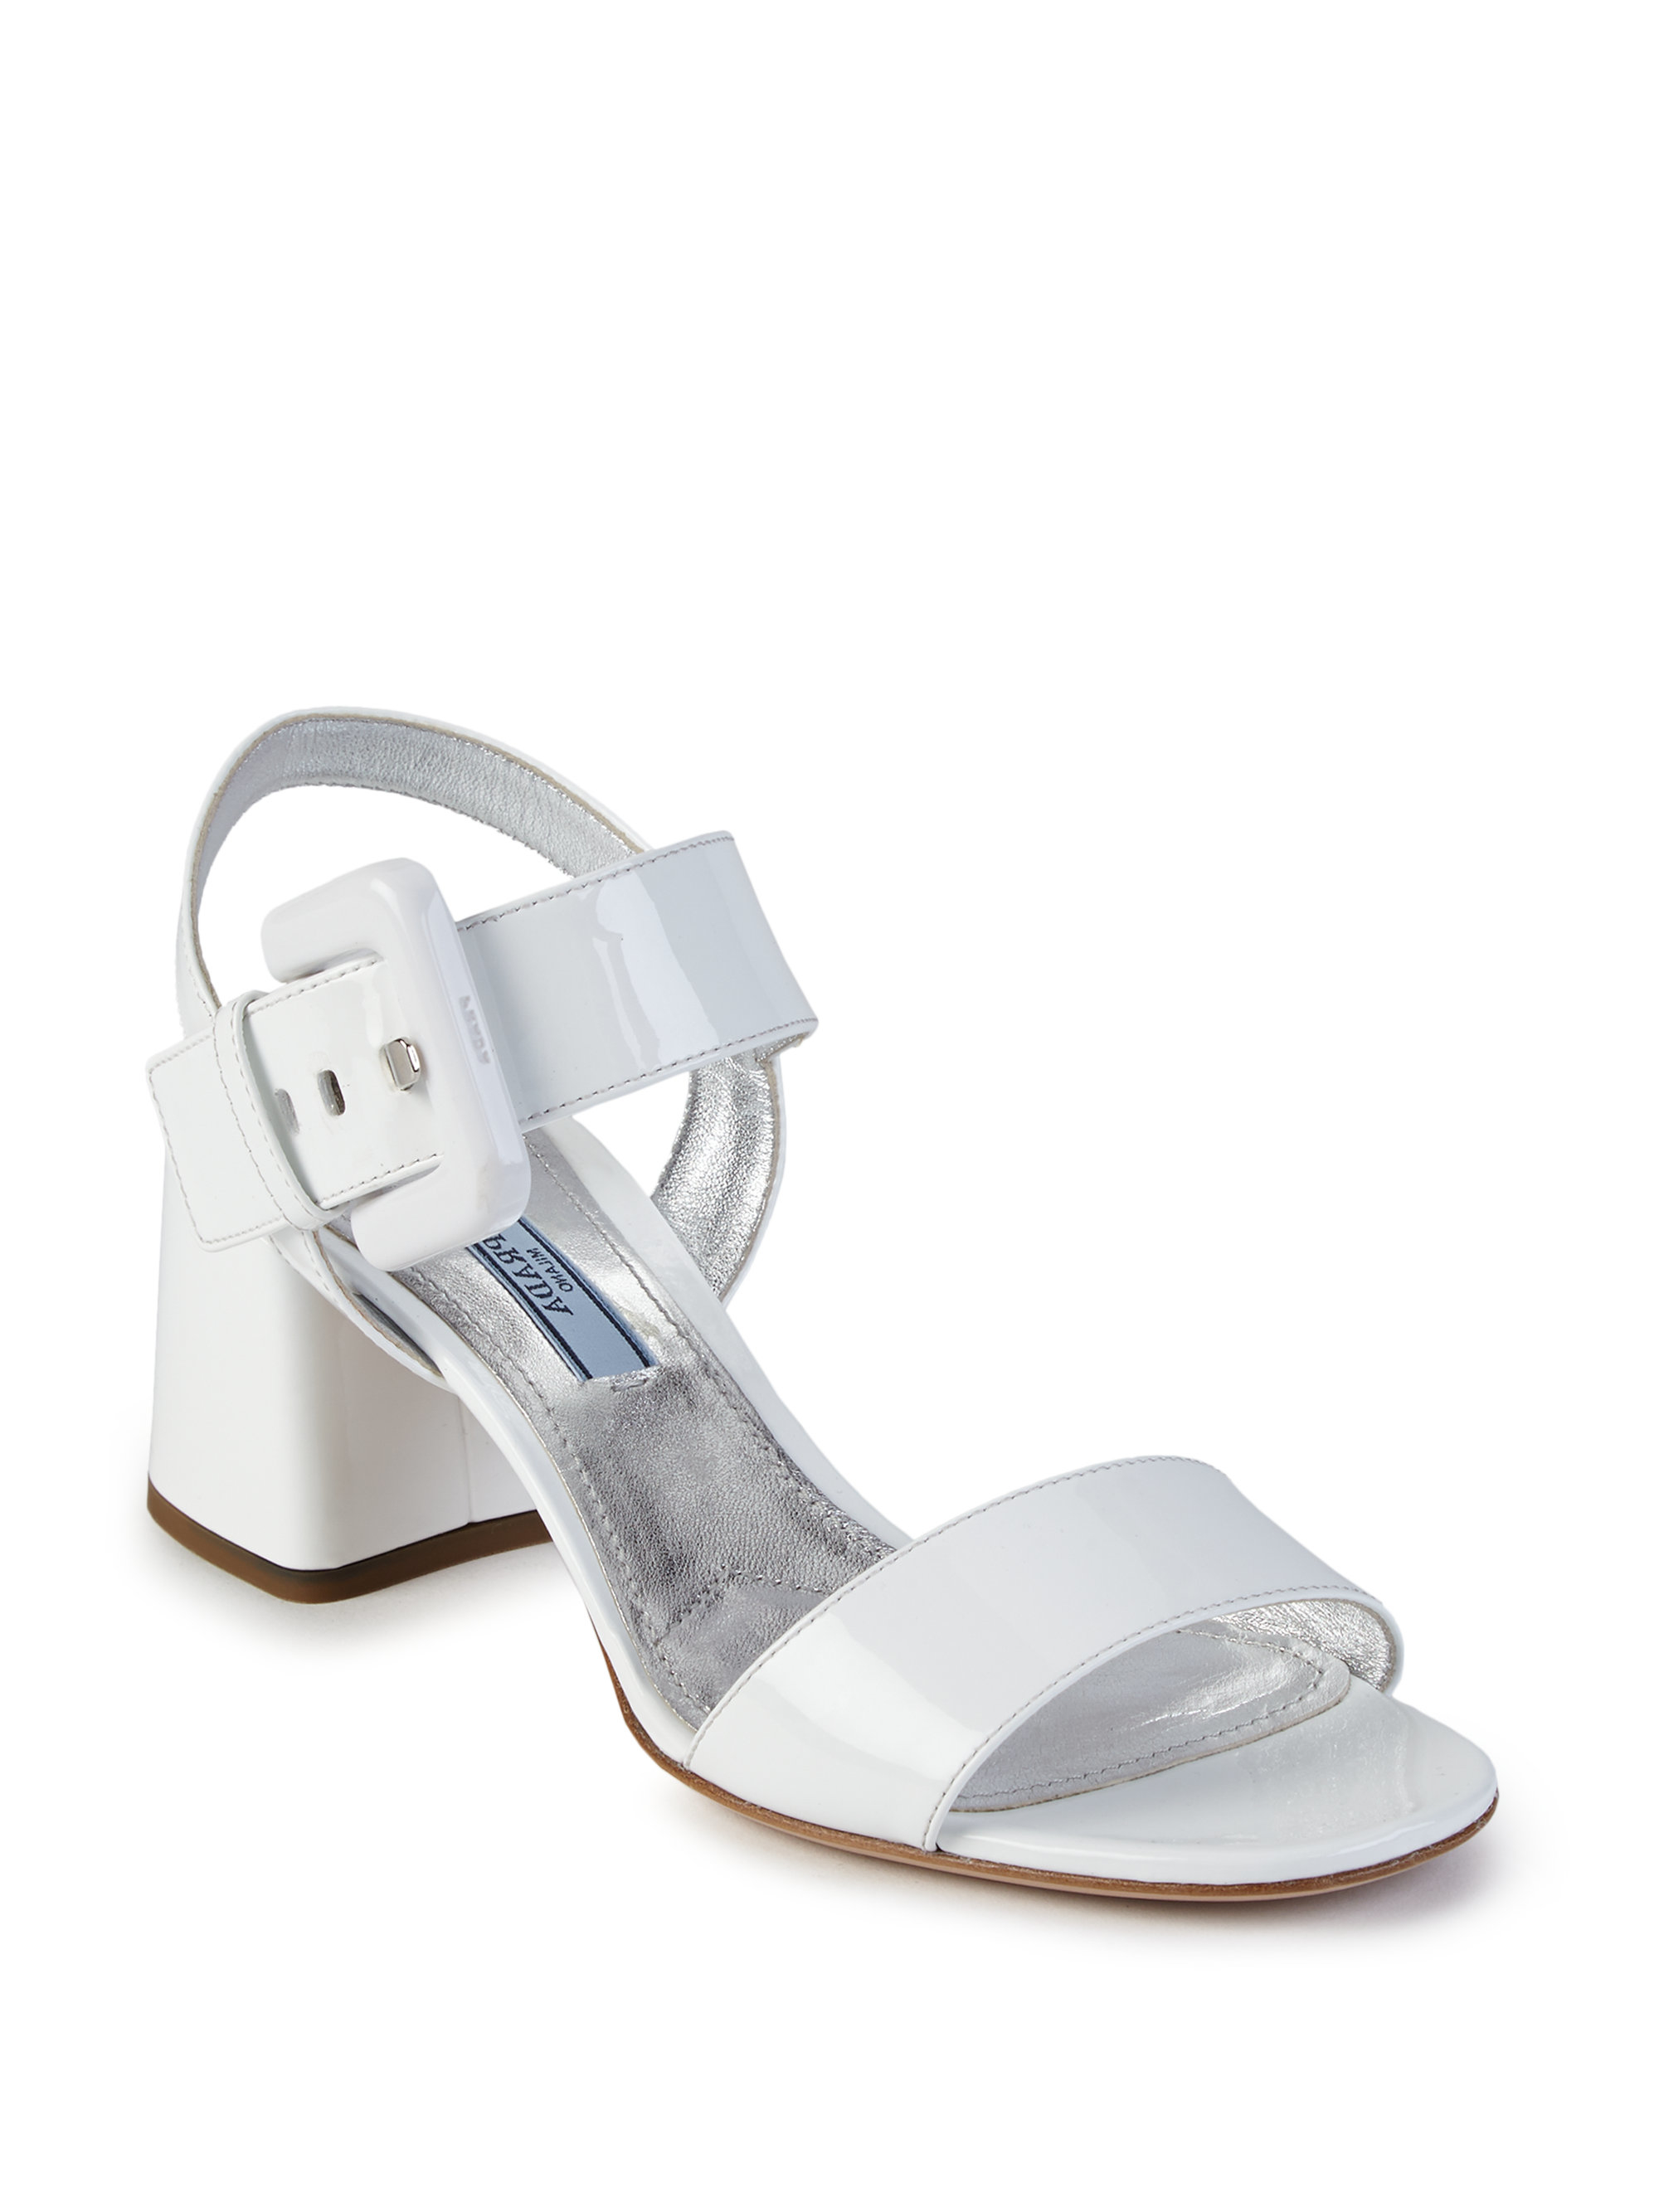 Prada Patent Leather Mid-heel Sandals in White | Lyst